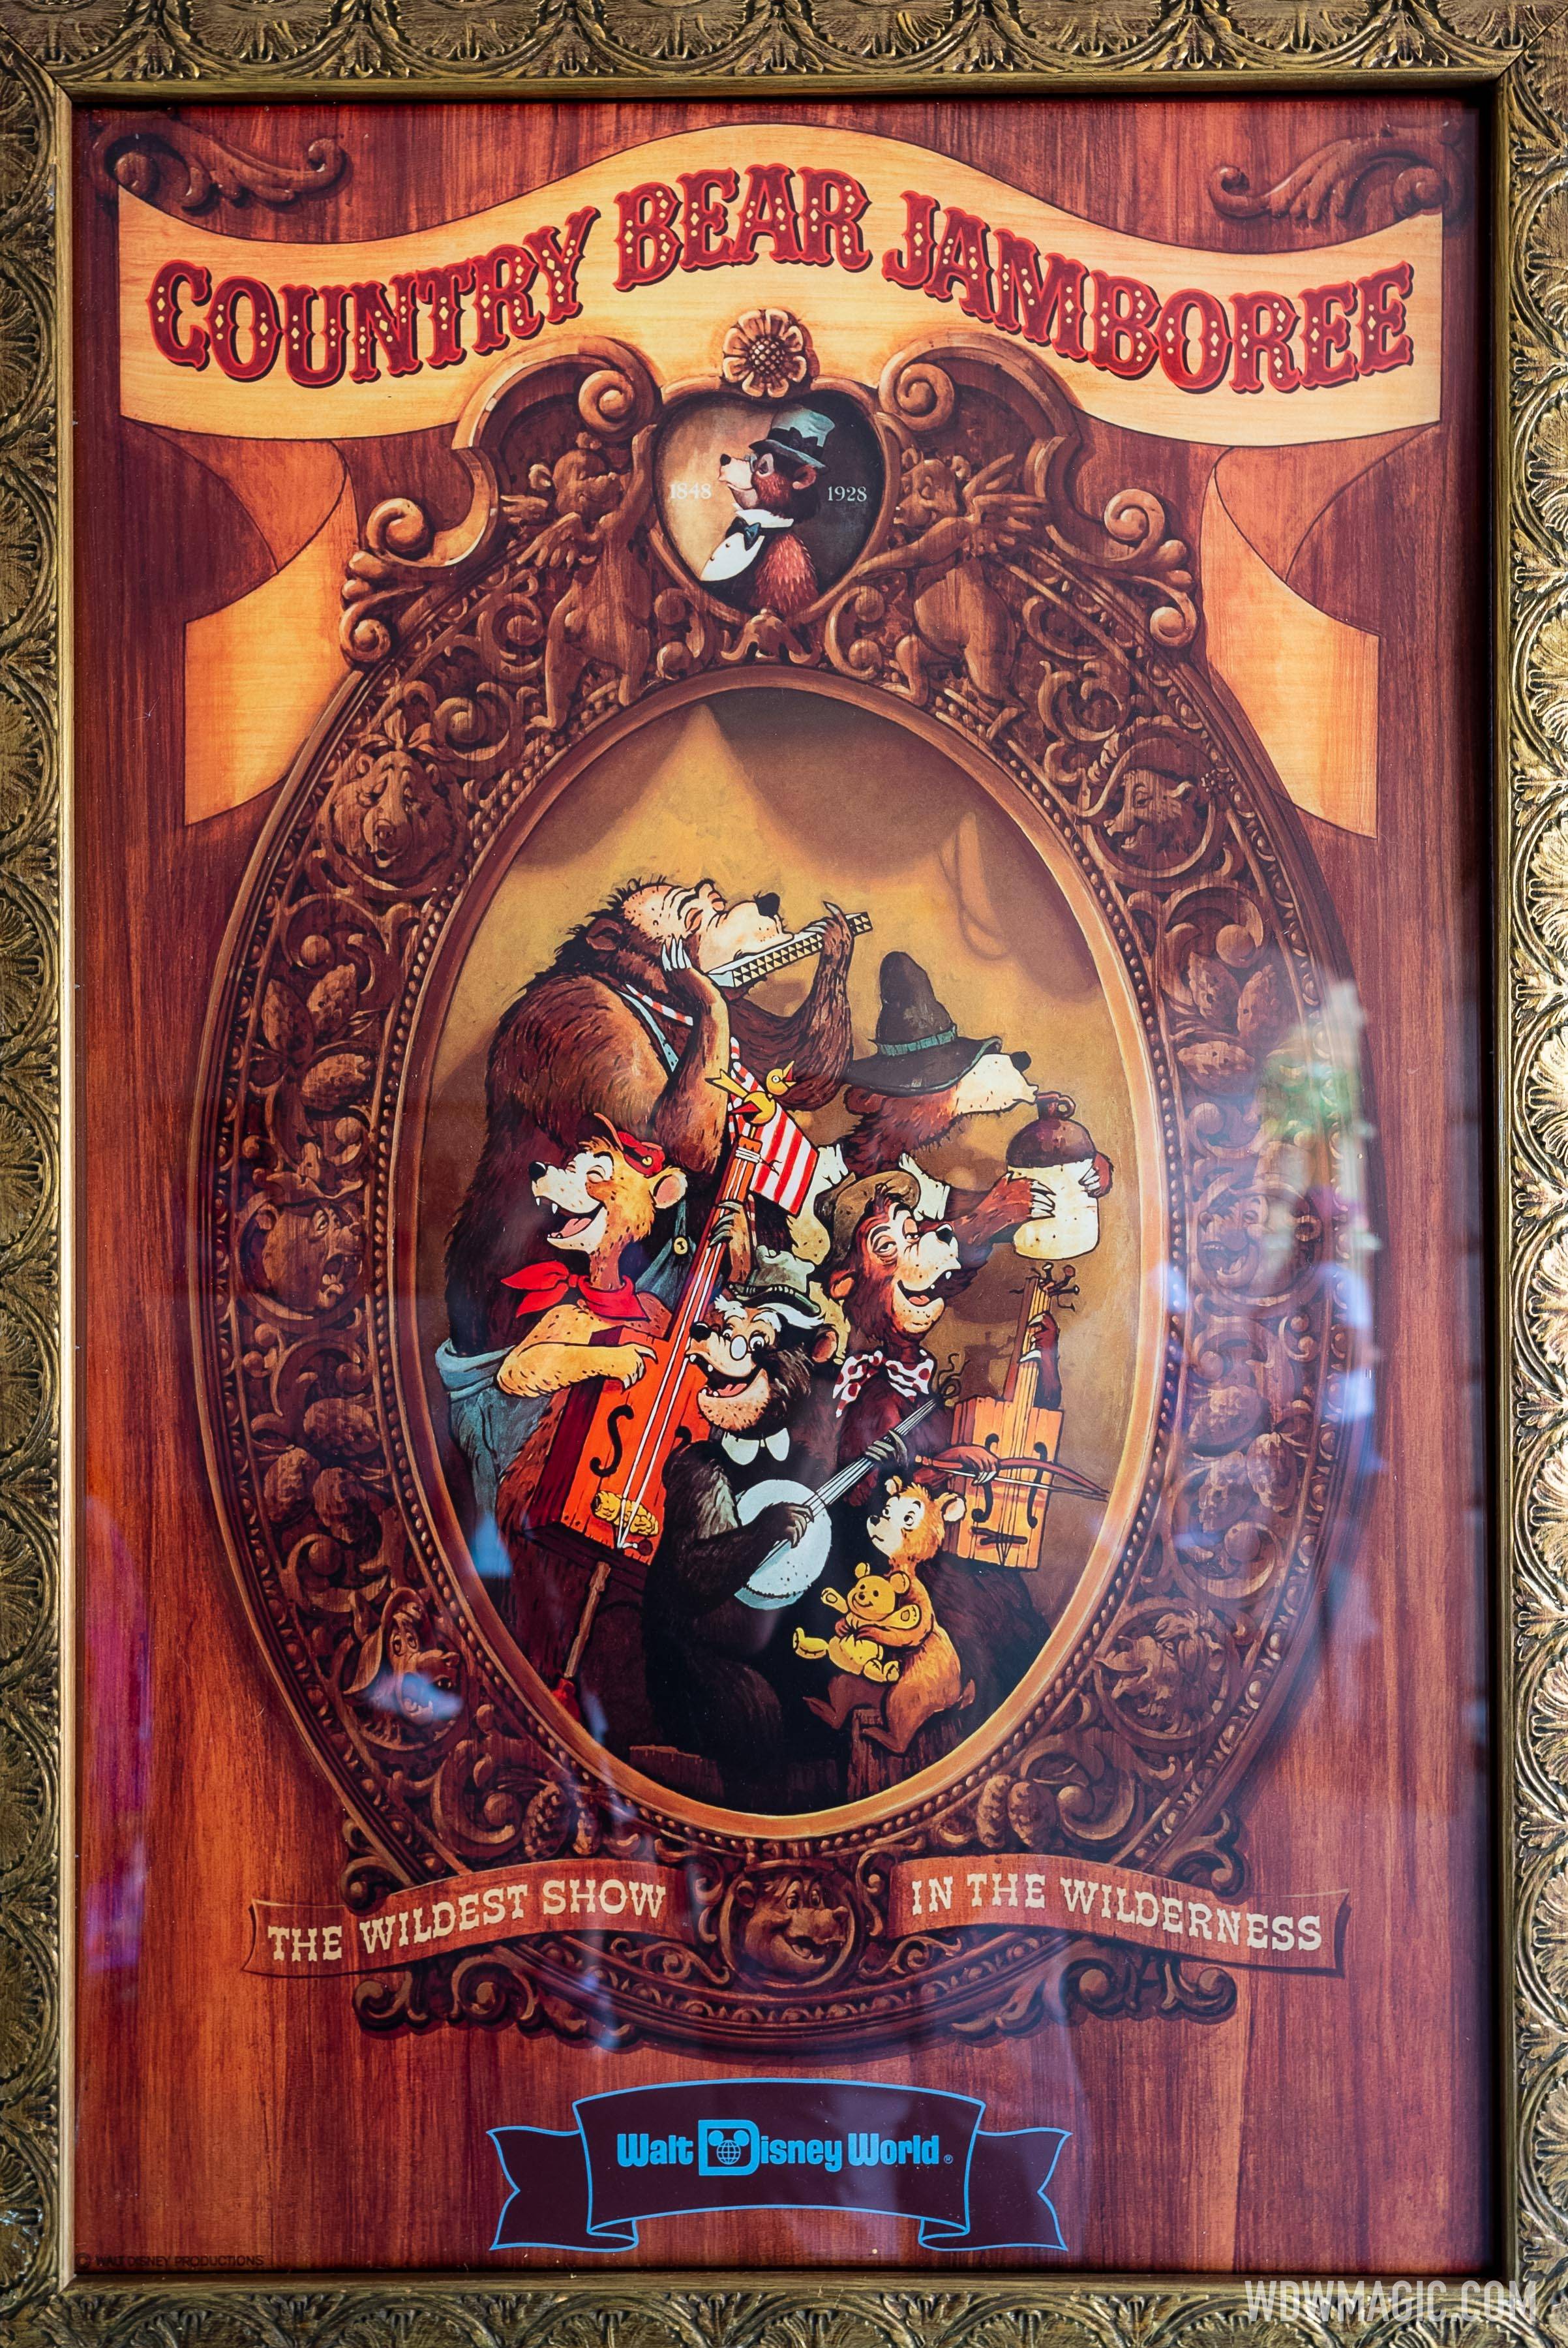 Magic Kingdom vintage attraction poster - Country Bear Jamboree